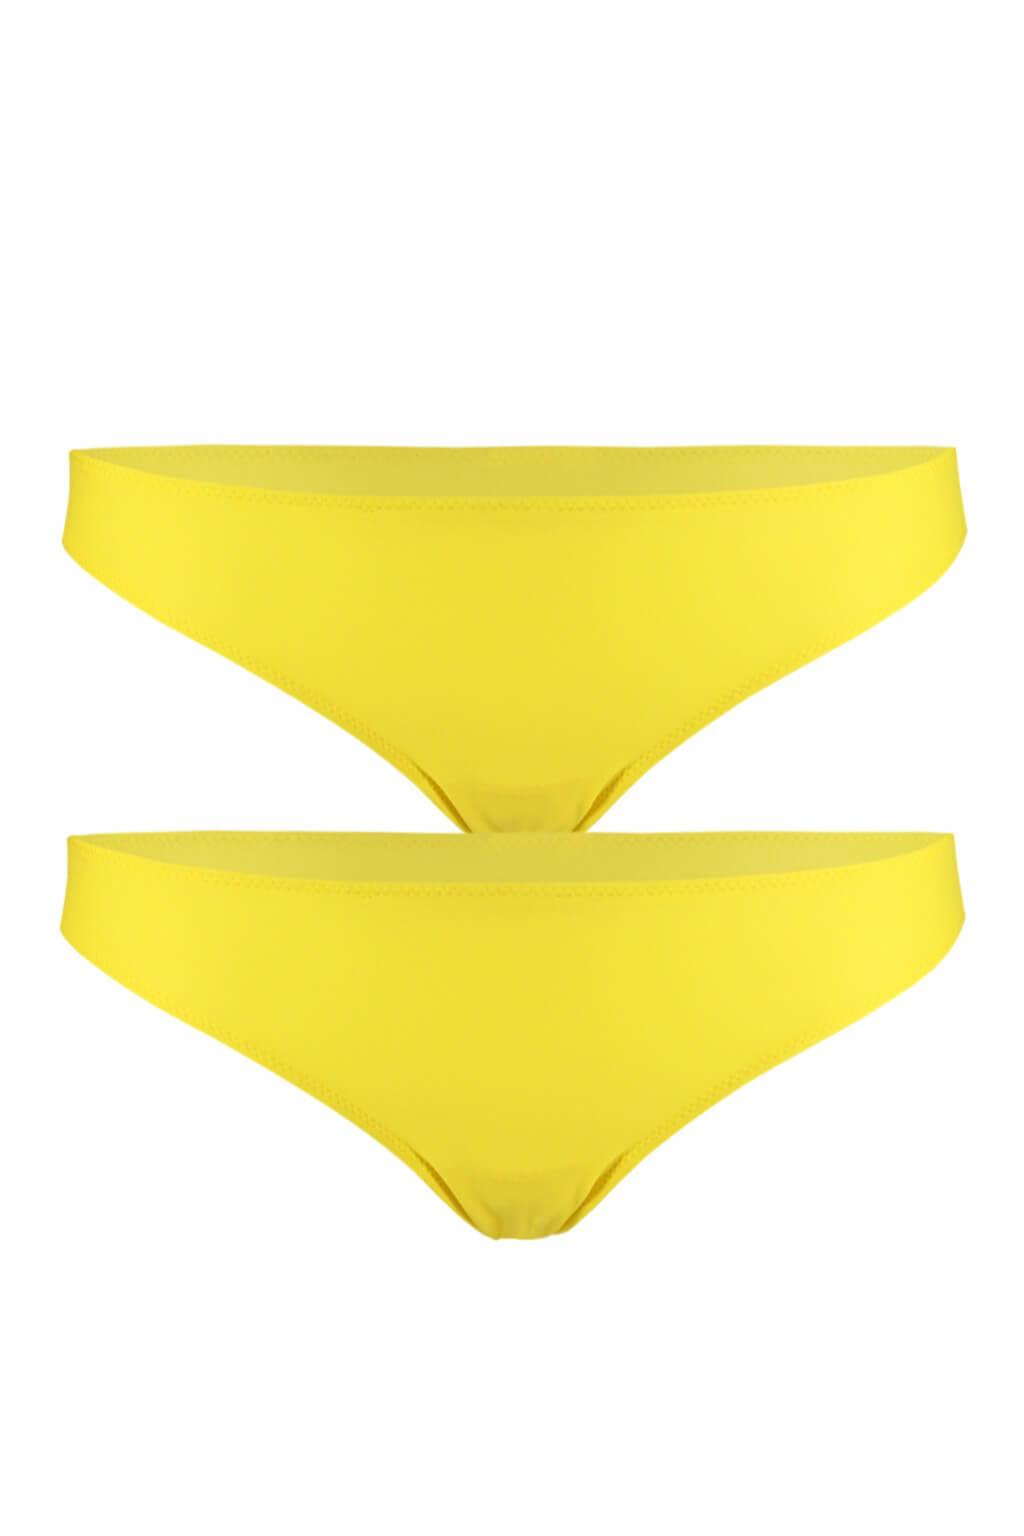 Bellinda kalhotky z mikrovlákna - Micro Slip 2ks M žlutá